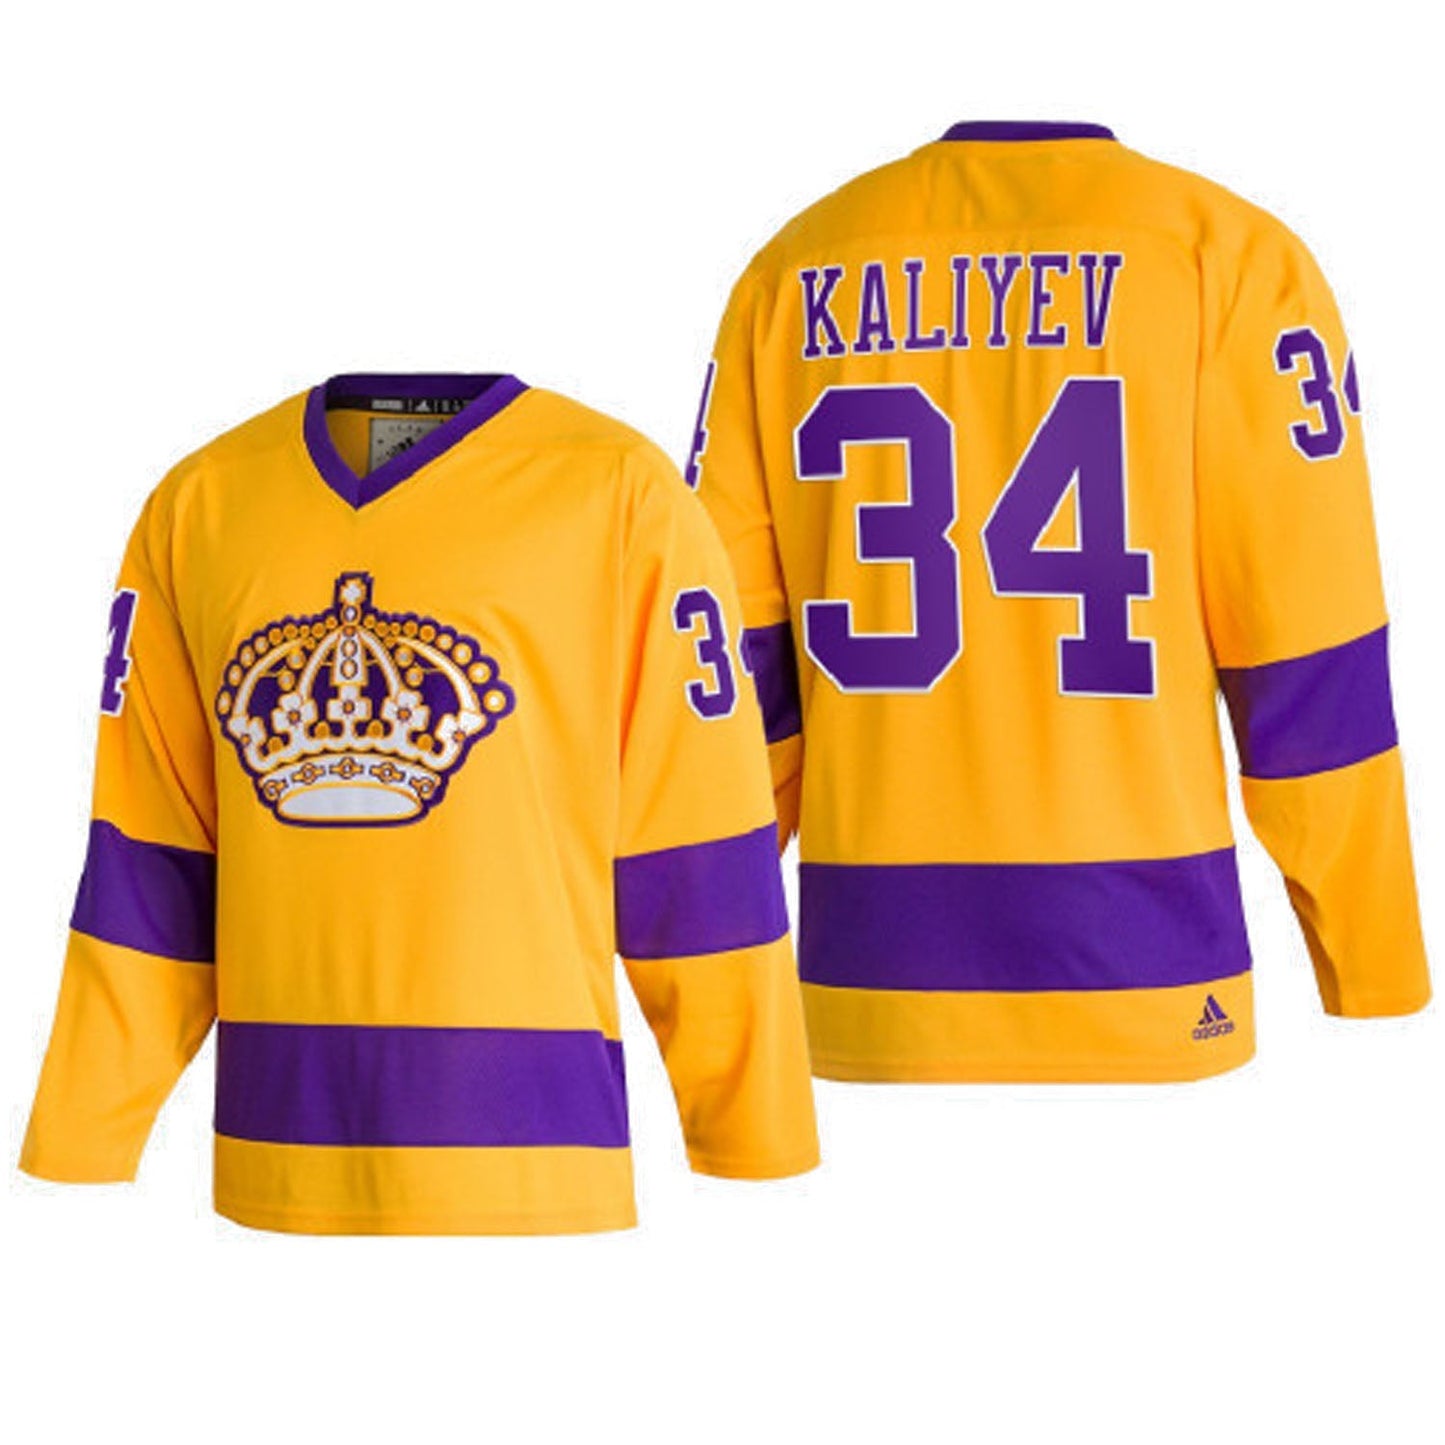 NHL Arthur Kaliyev La Kings 34 Jersey